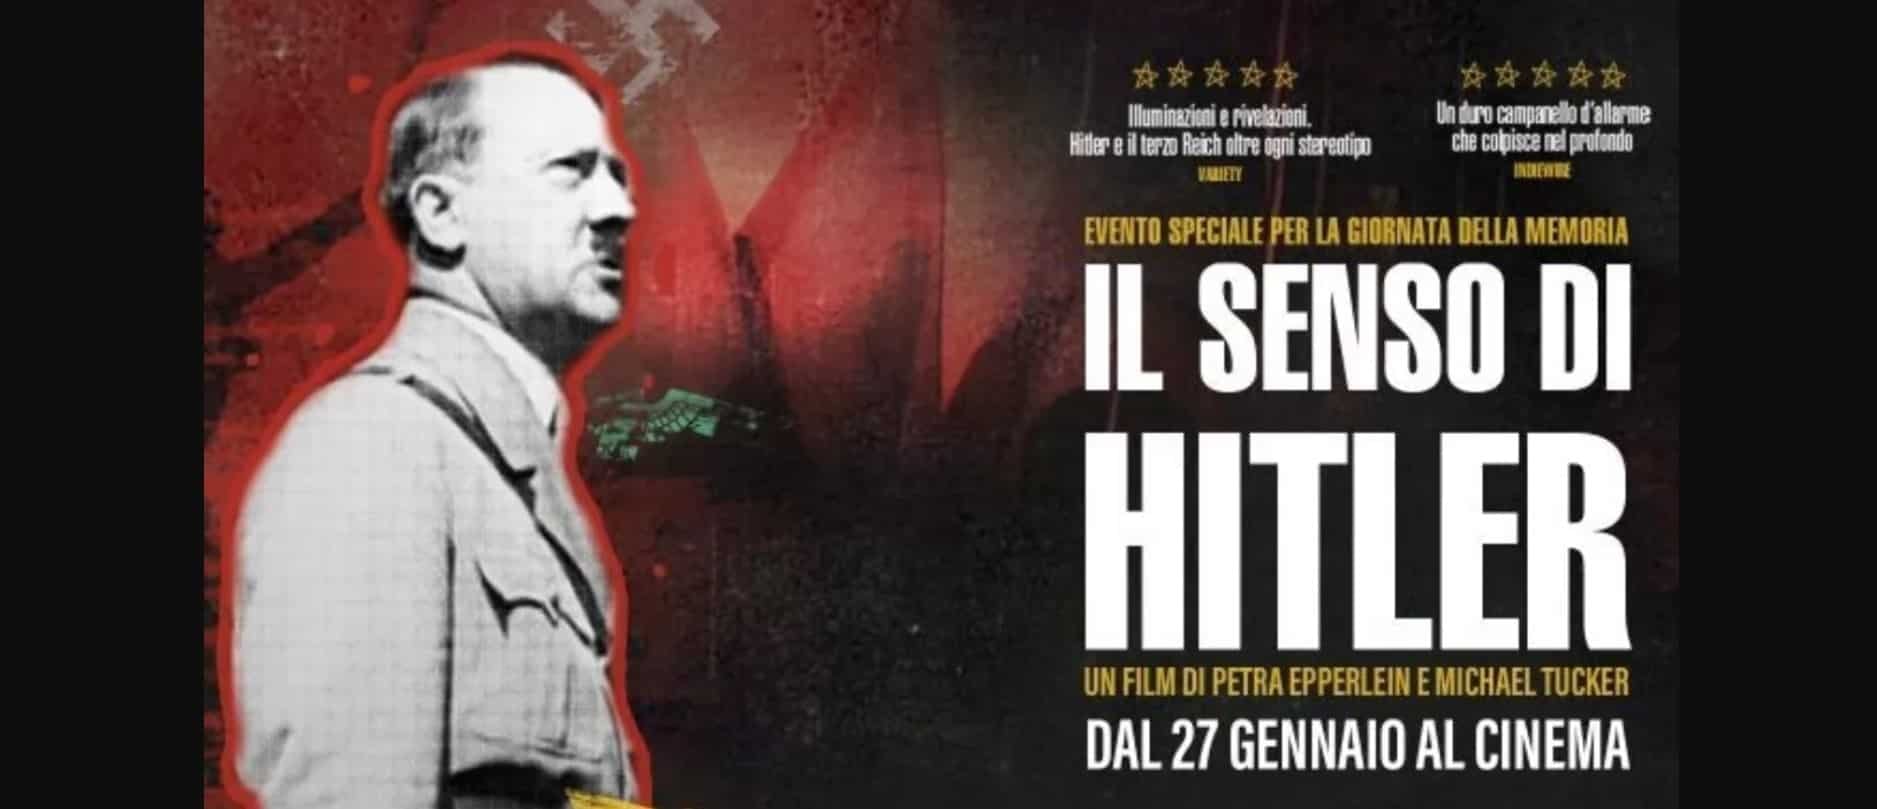 Il Senso di Hitler - Crime Window Newsletter - magazine ilbiondino.org - ProsMedia